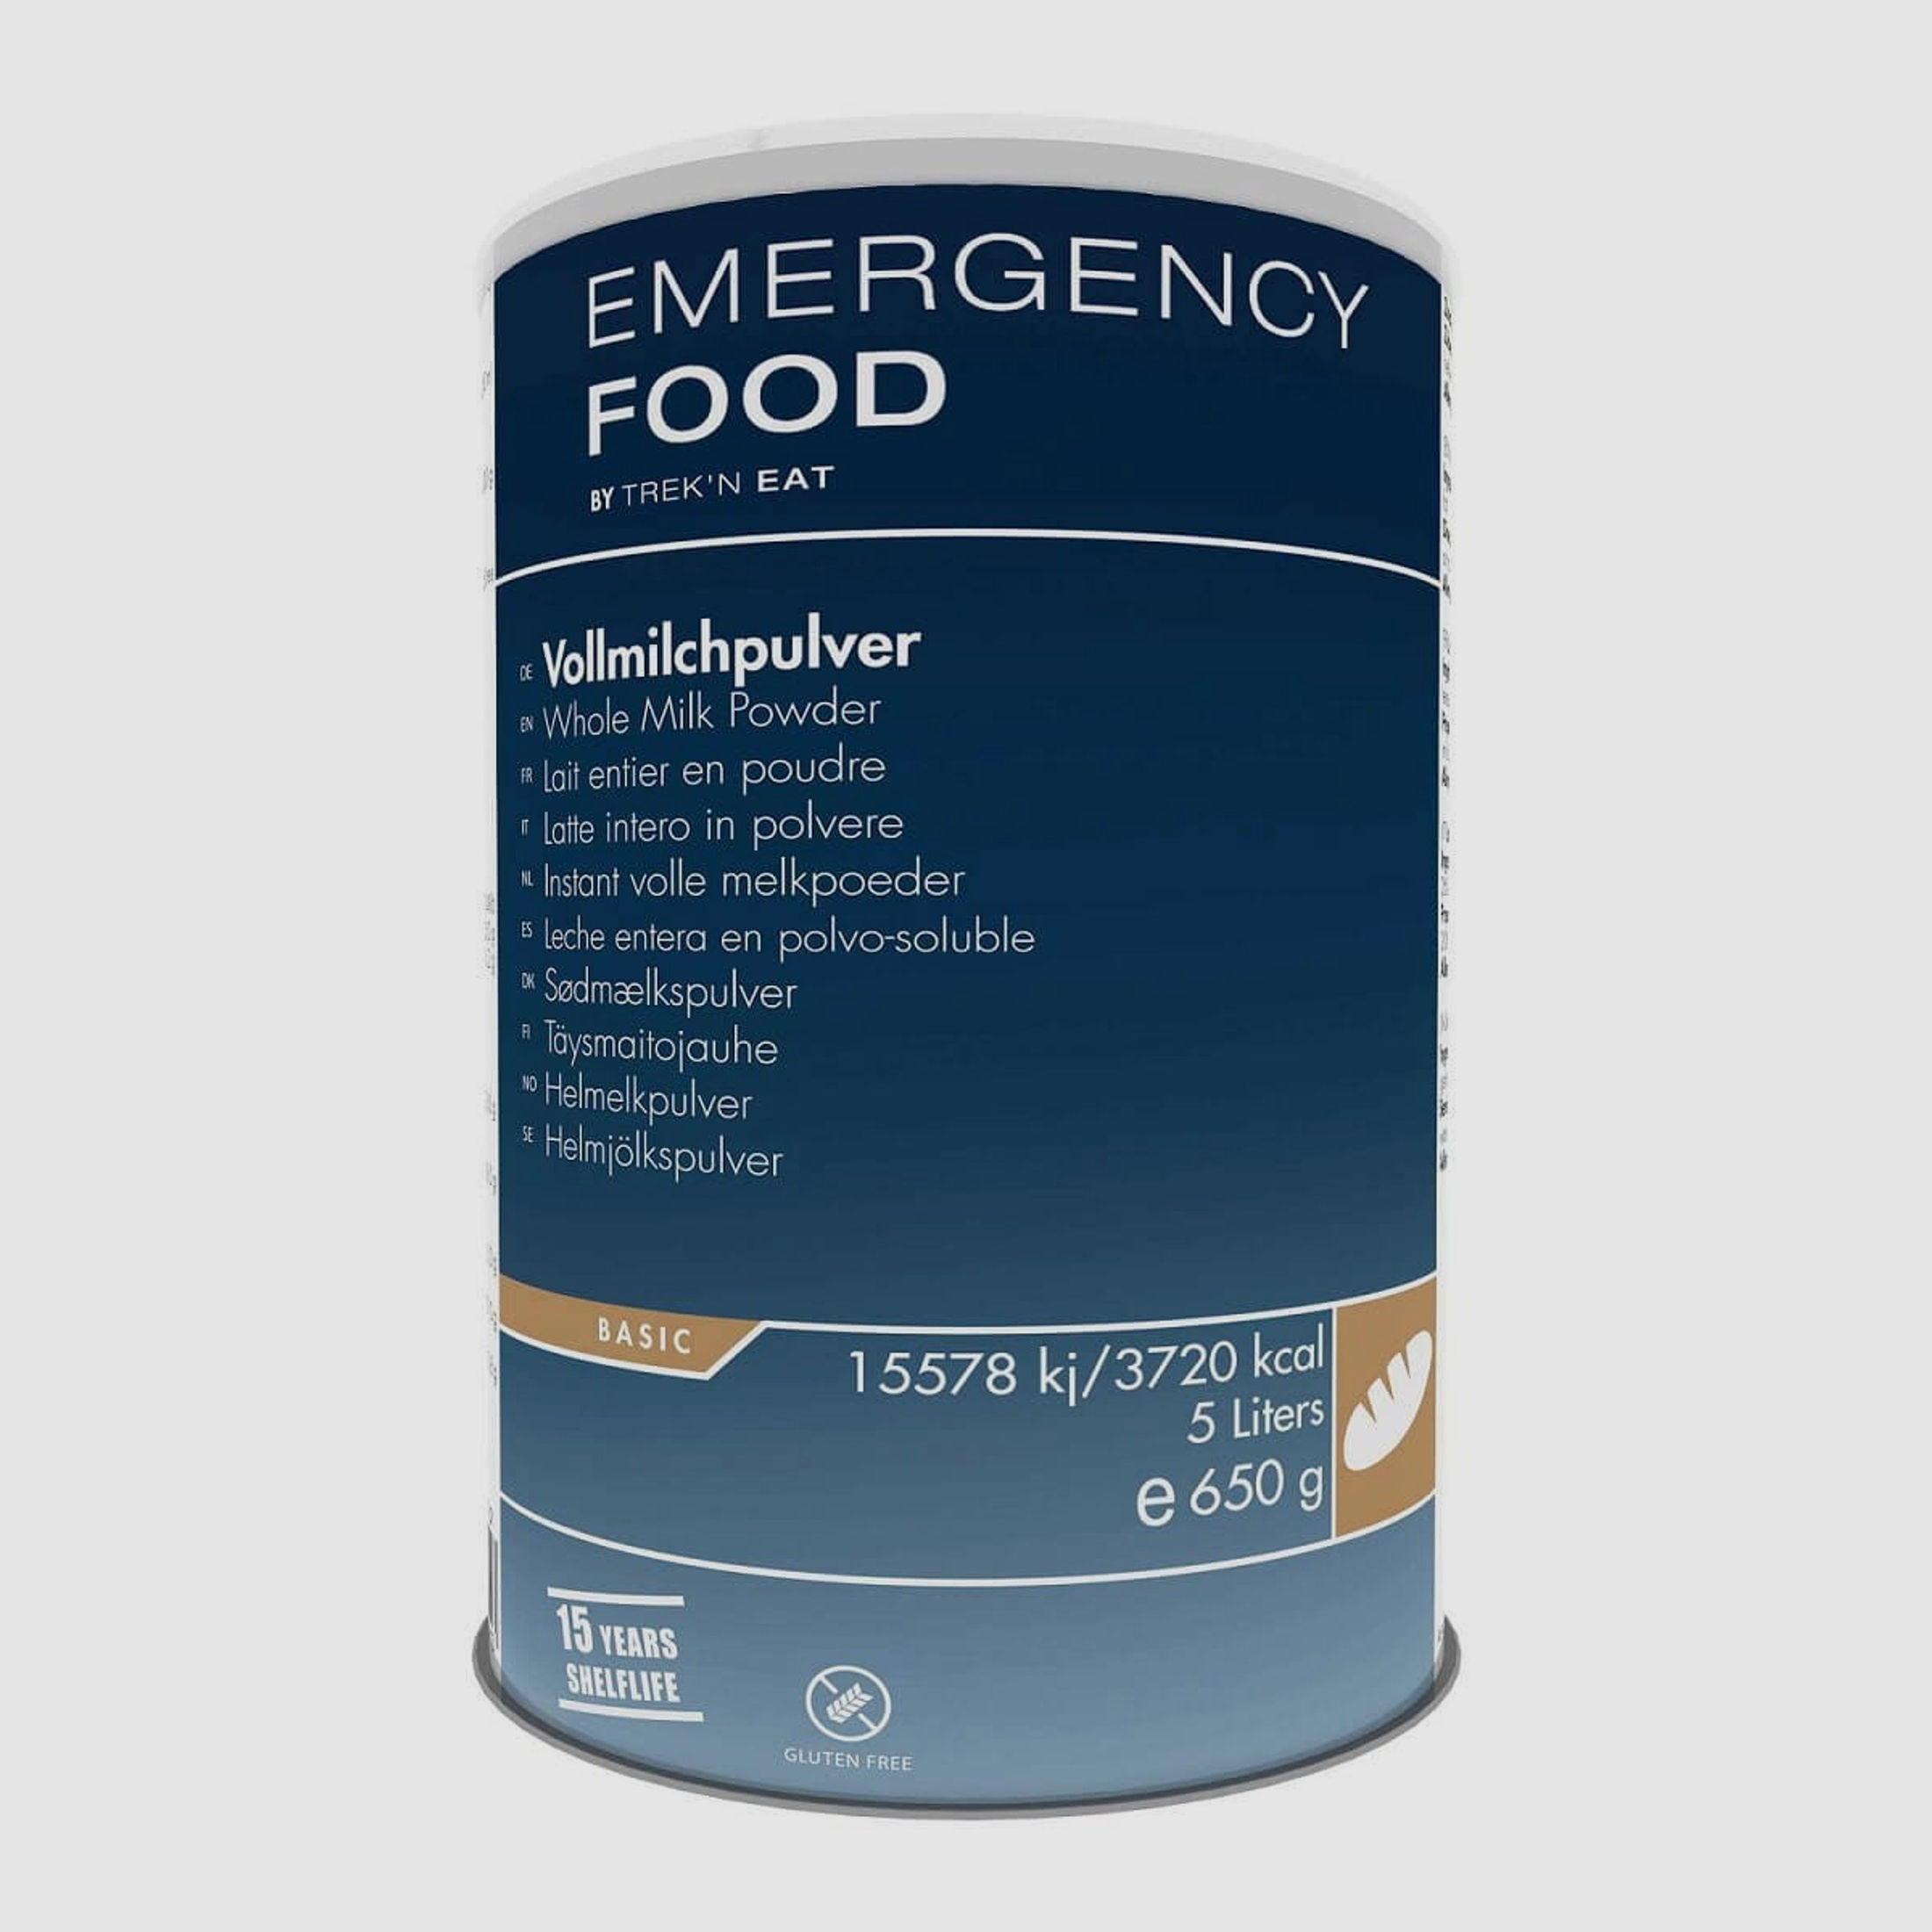 TREK'N EAT EMERGENCY FOOD Vollmilchpulver - Instant - 650 g